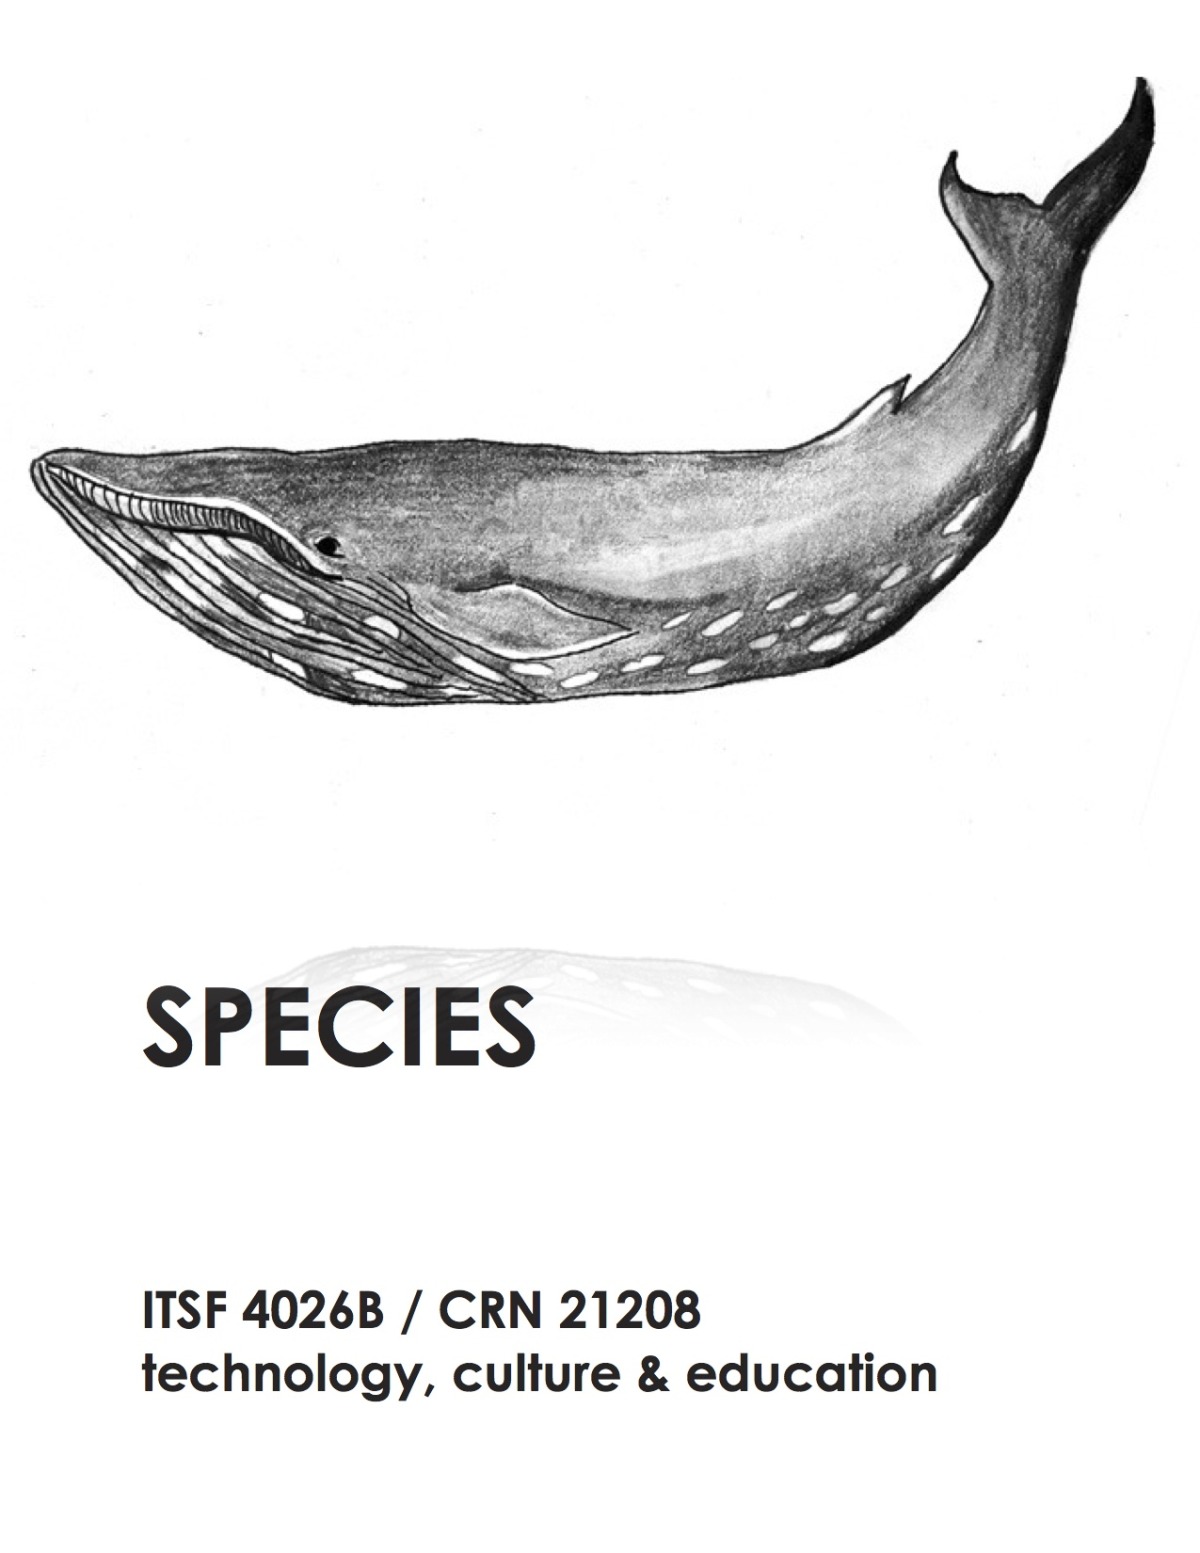 itsf 4026b flyers - species.jpg